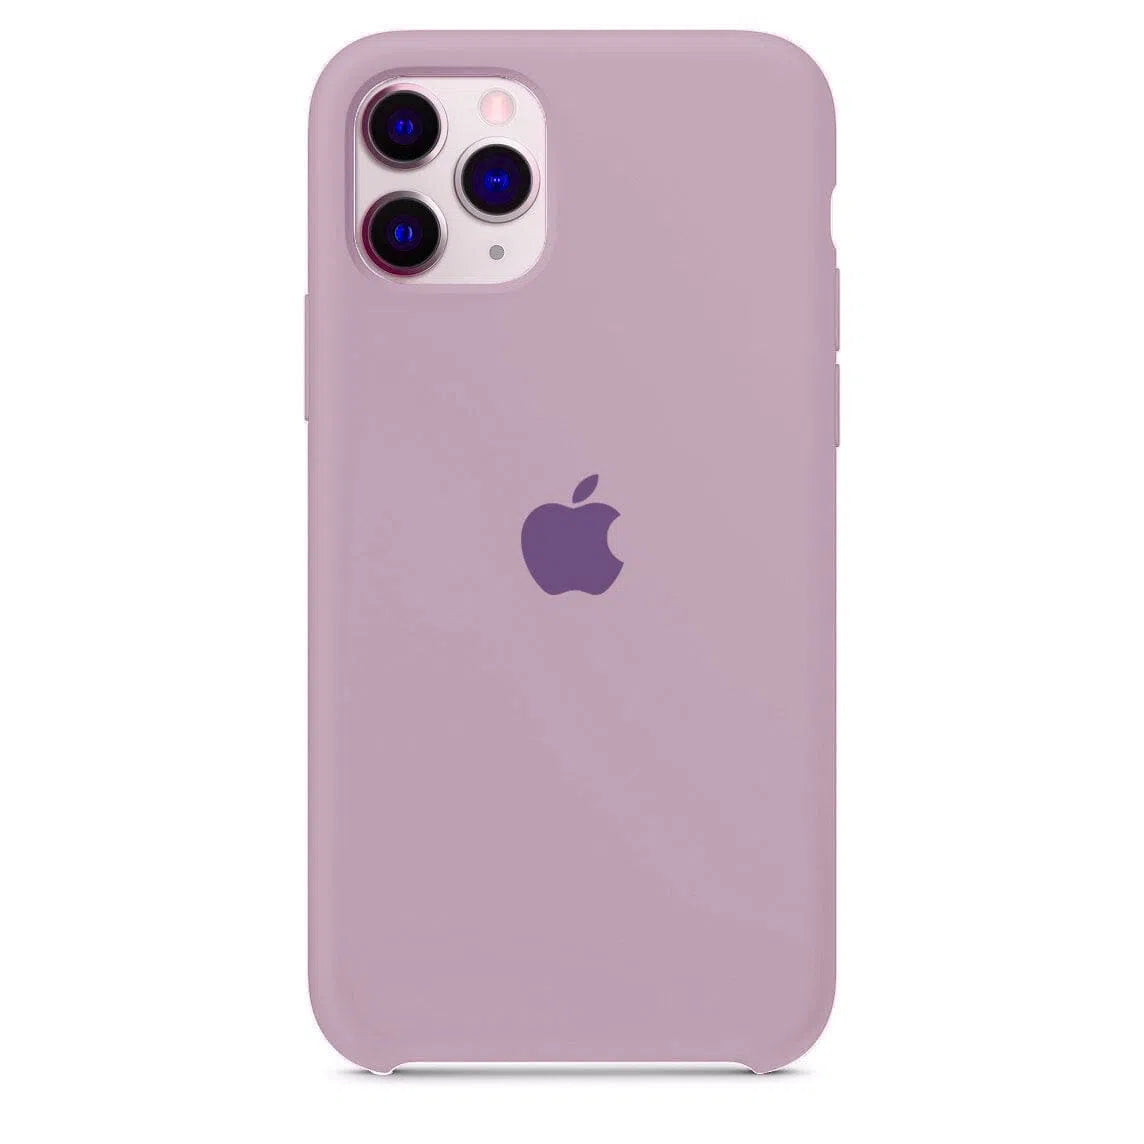 Husa iPhone Silicone Case Lavender (Mov Pal) Anca's Store 11 Pro Max 